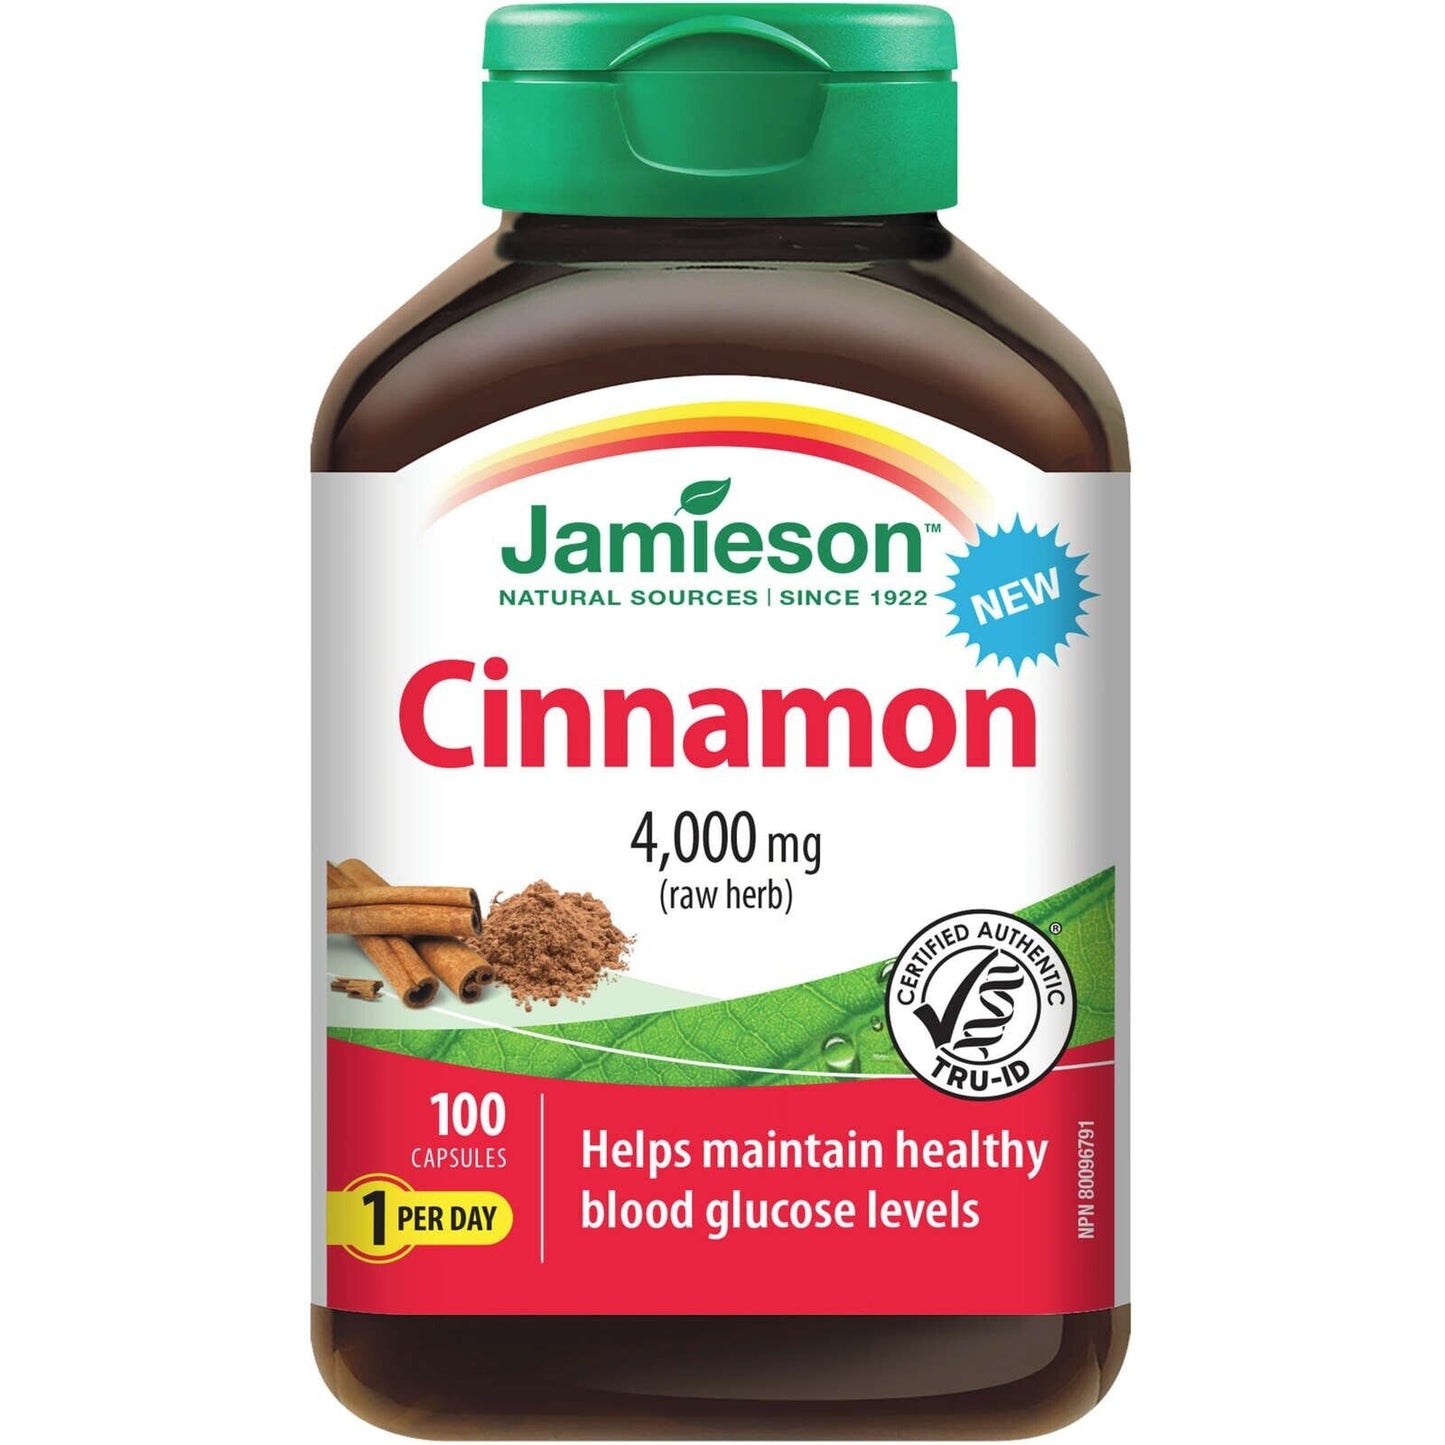 Jamieson Cinnamon 4,000 mg Raw Herb Glucose Levels Naturally Sourced 100pcs NEW